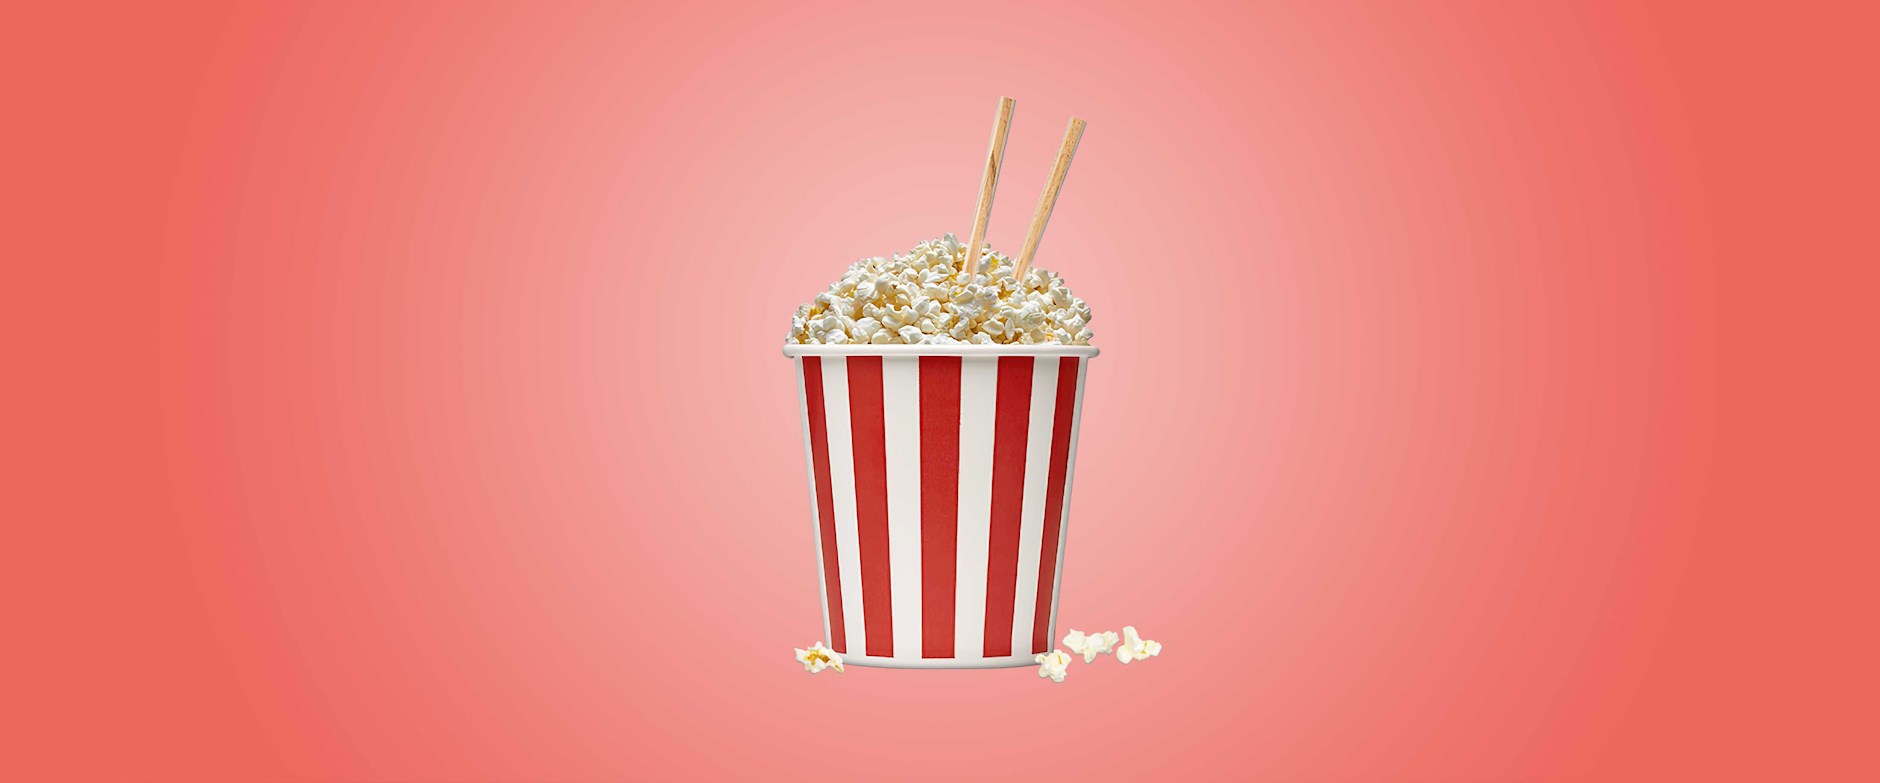 Popcorn in bucket with chopsticks